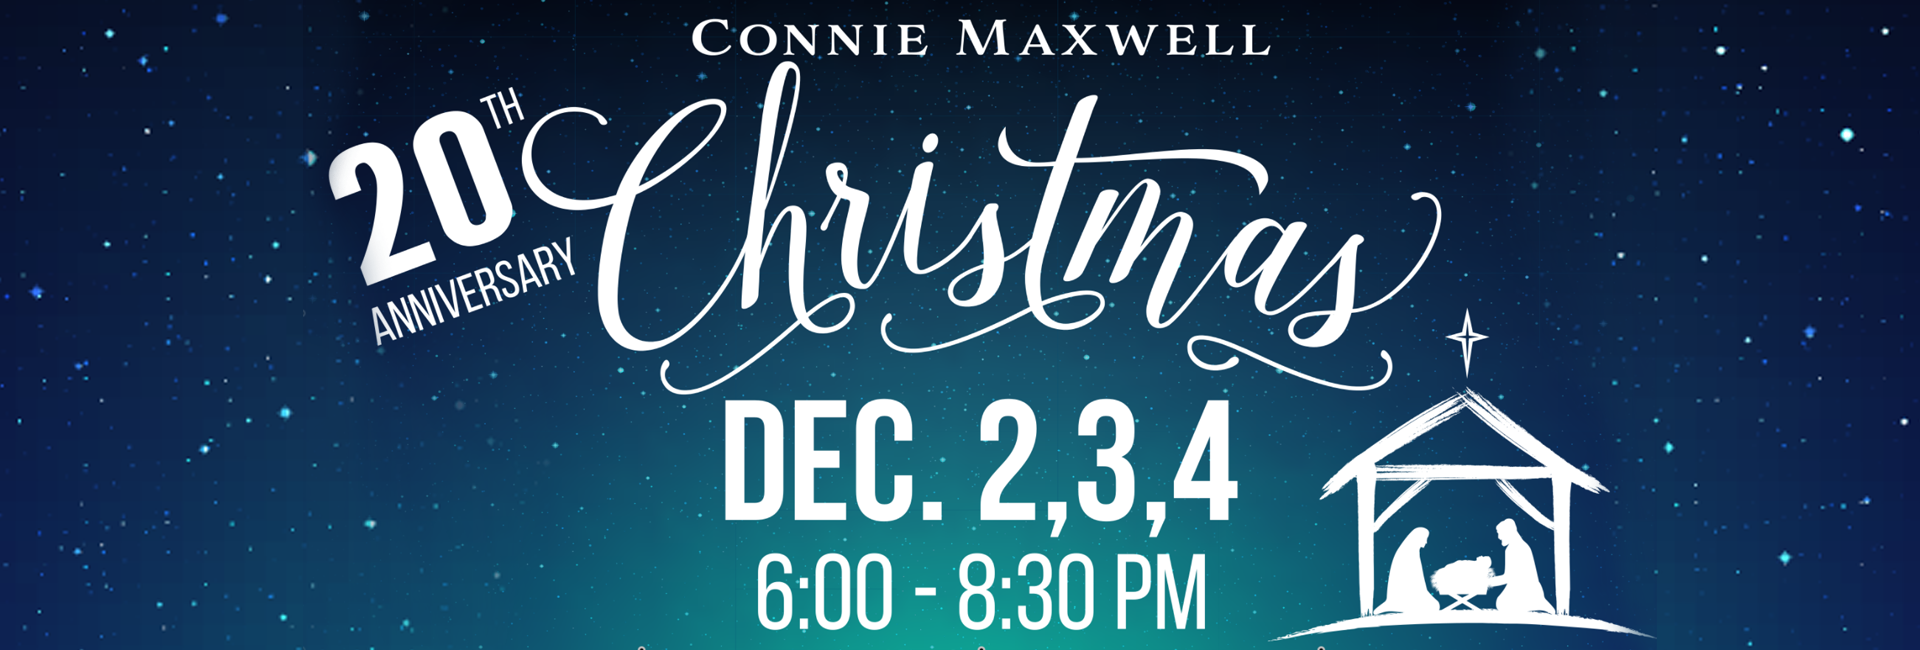 20th Anniversary Connie Maxwell Christmas Celebration Connie Maxwell